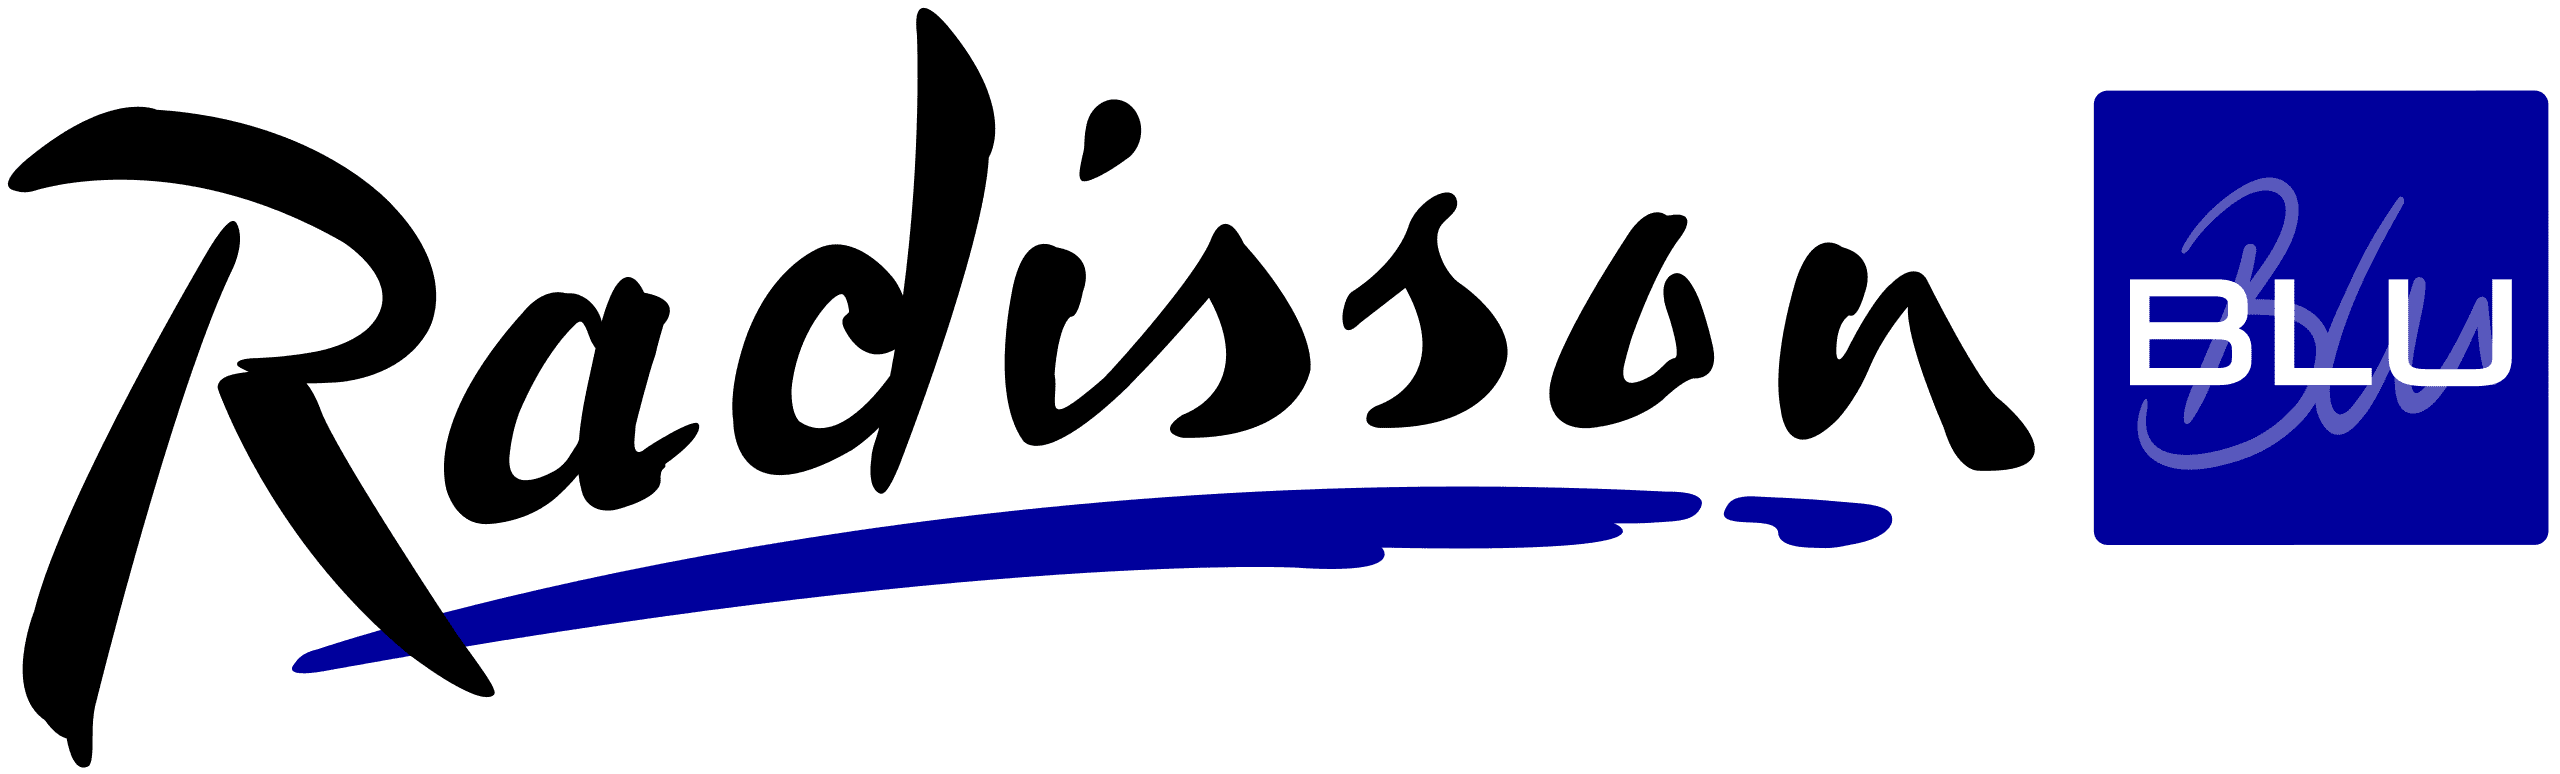 Radisson_Blu_logo.svg